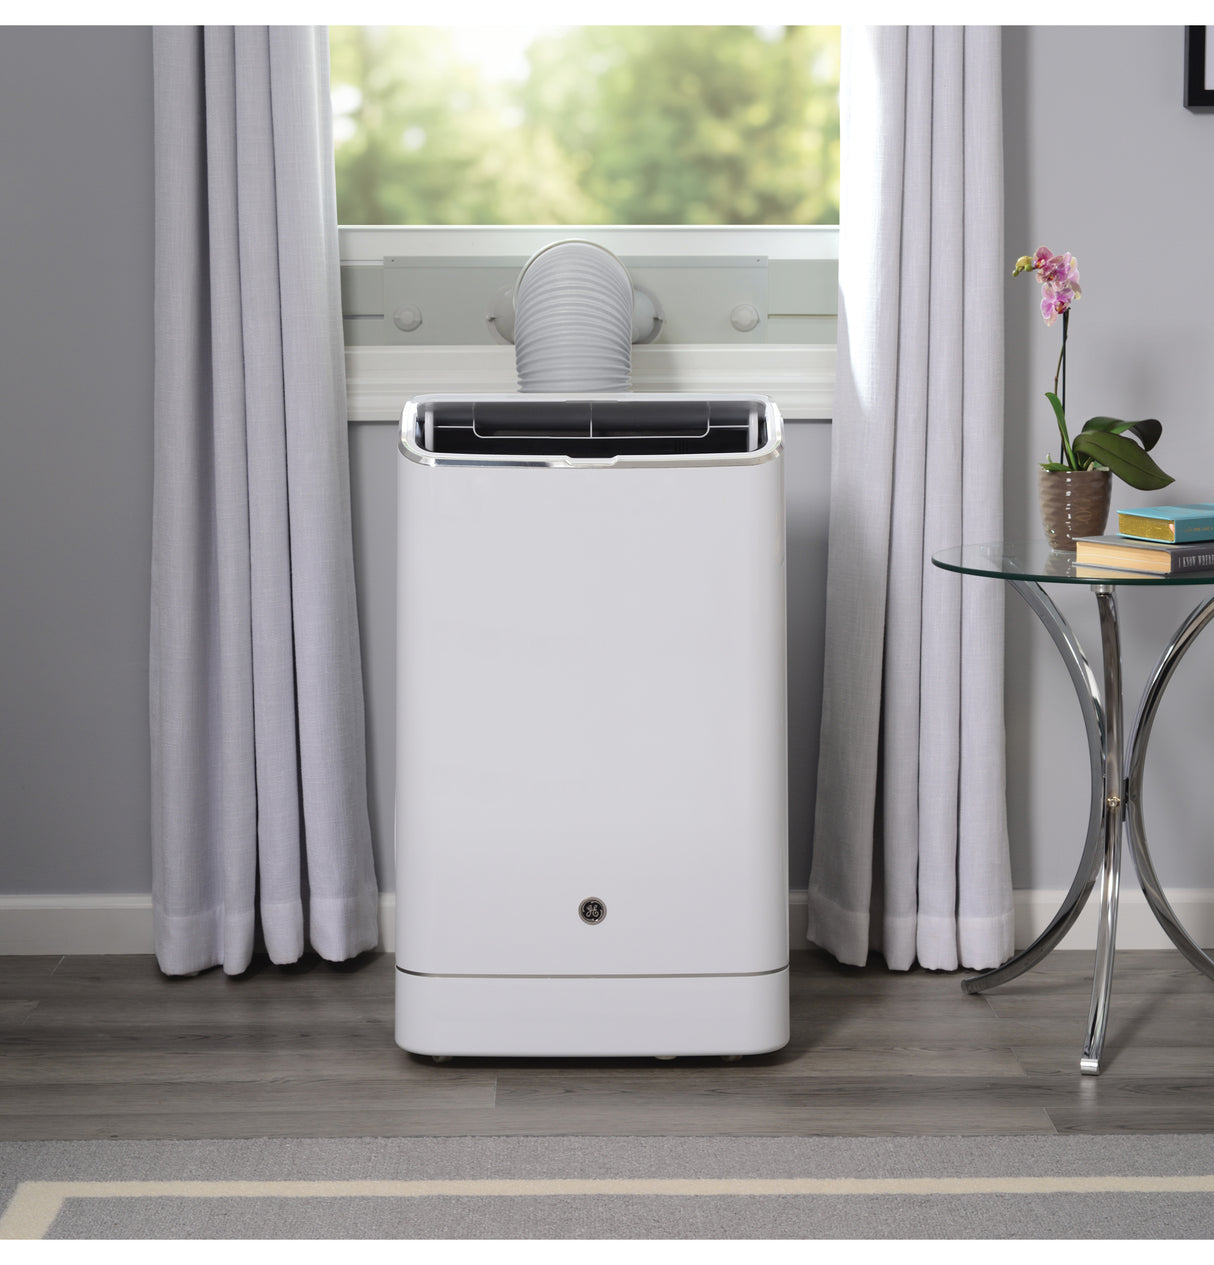 GE(R) 14,000 BTU Portable Air Conditioner for Medium Rooms up to 550 sq ft. (9,850 BTU SACC) - (APCA14YBMW)